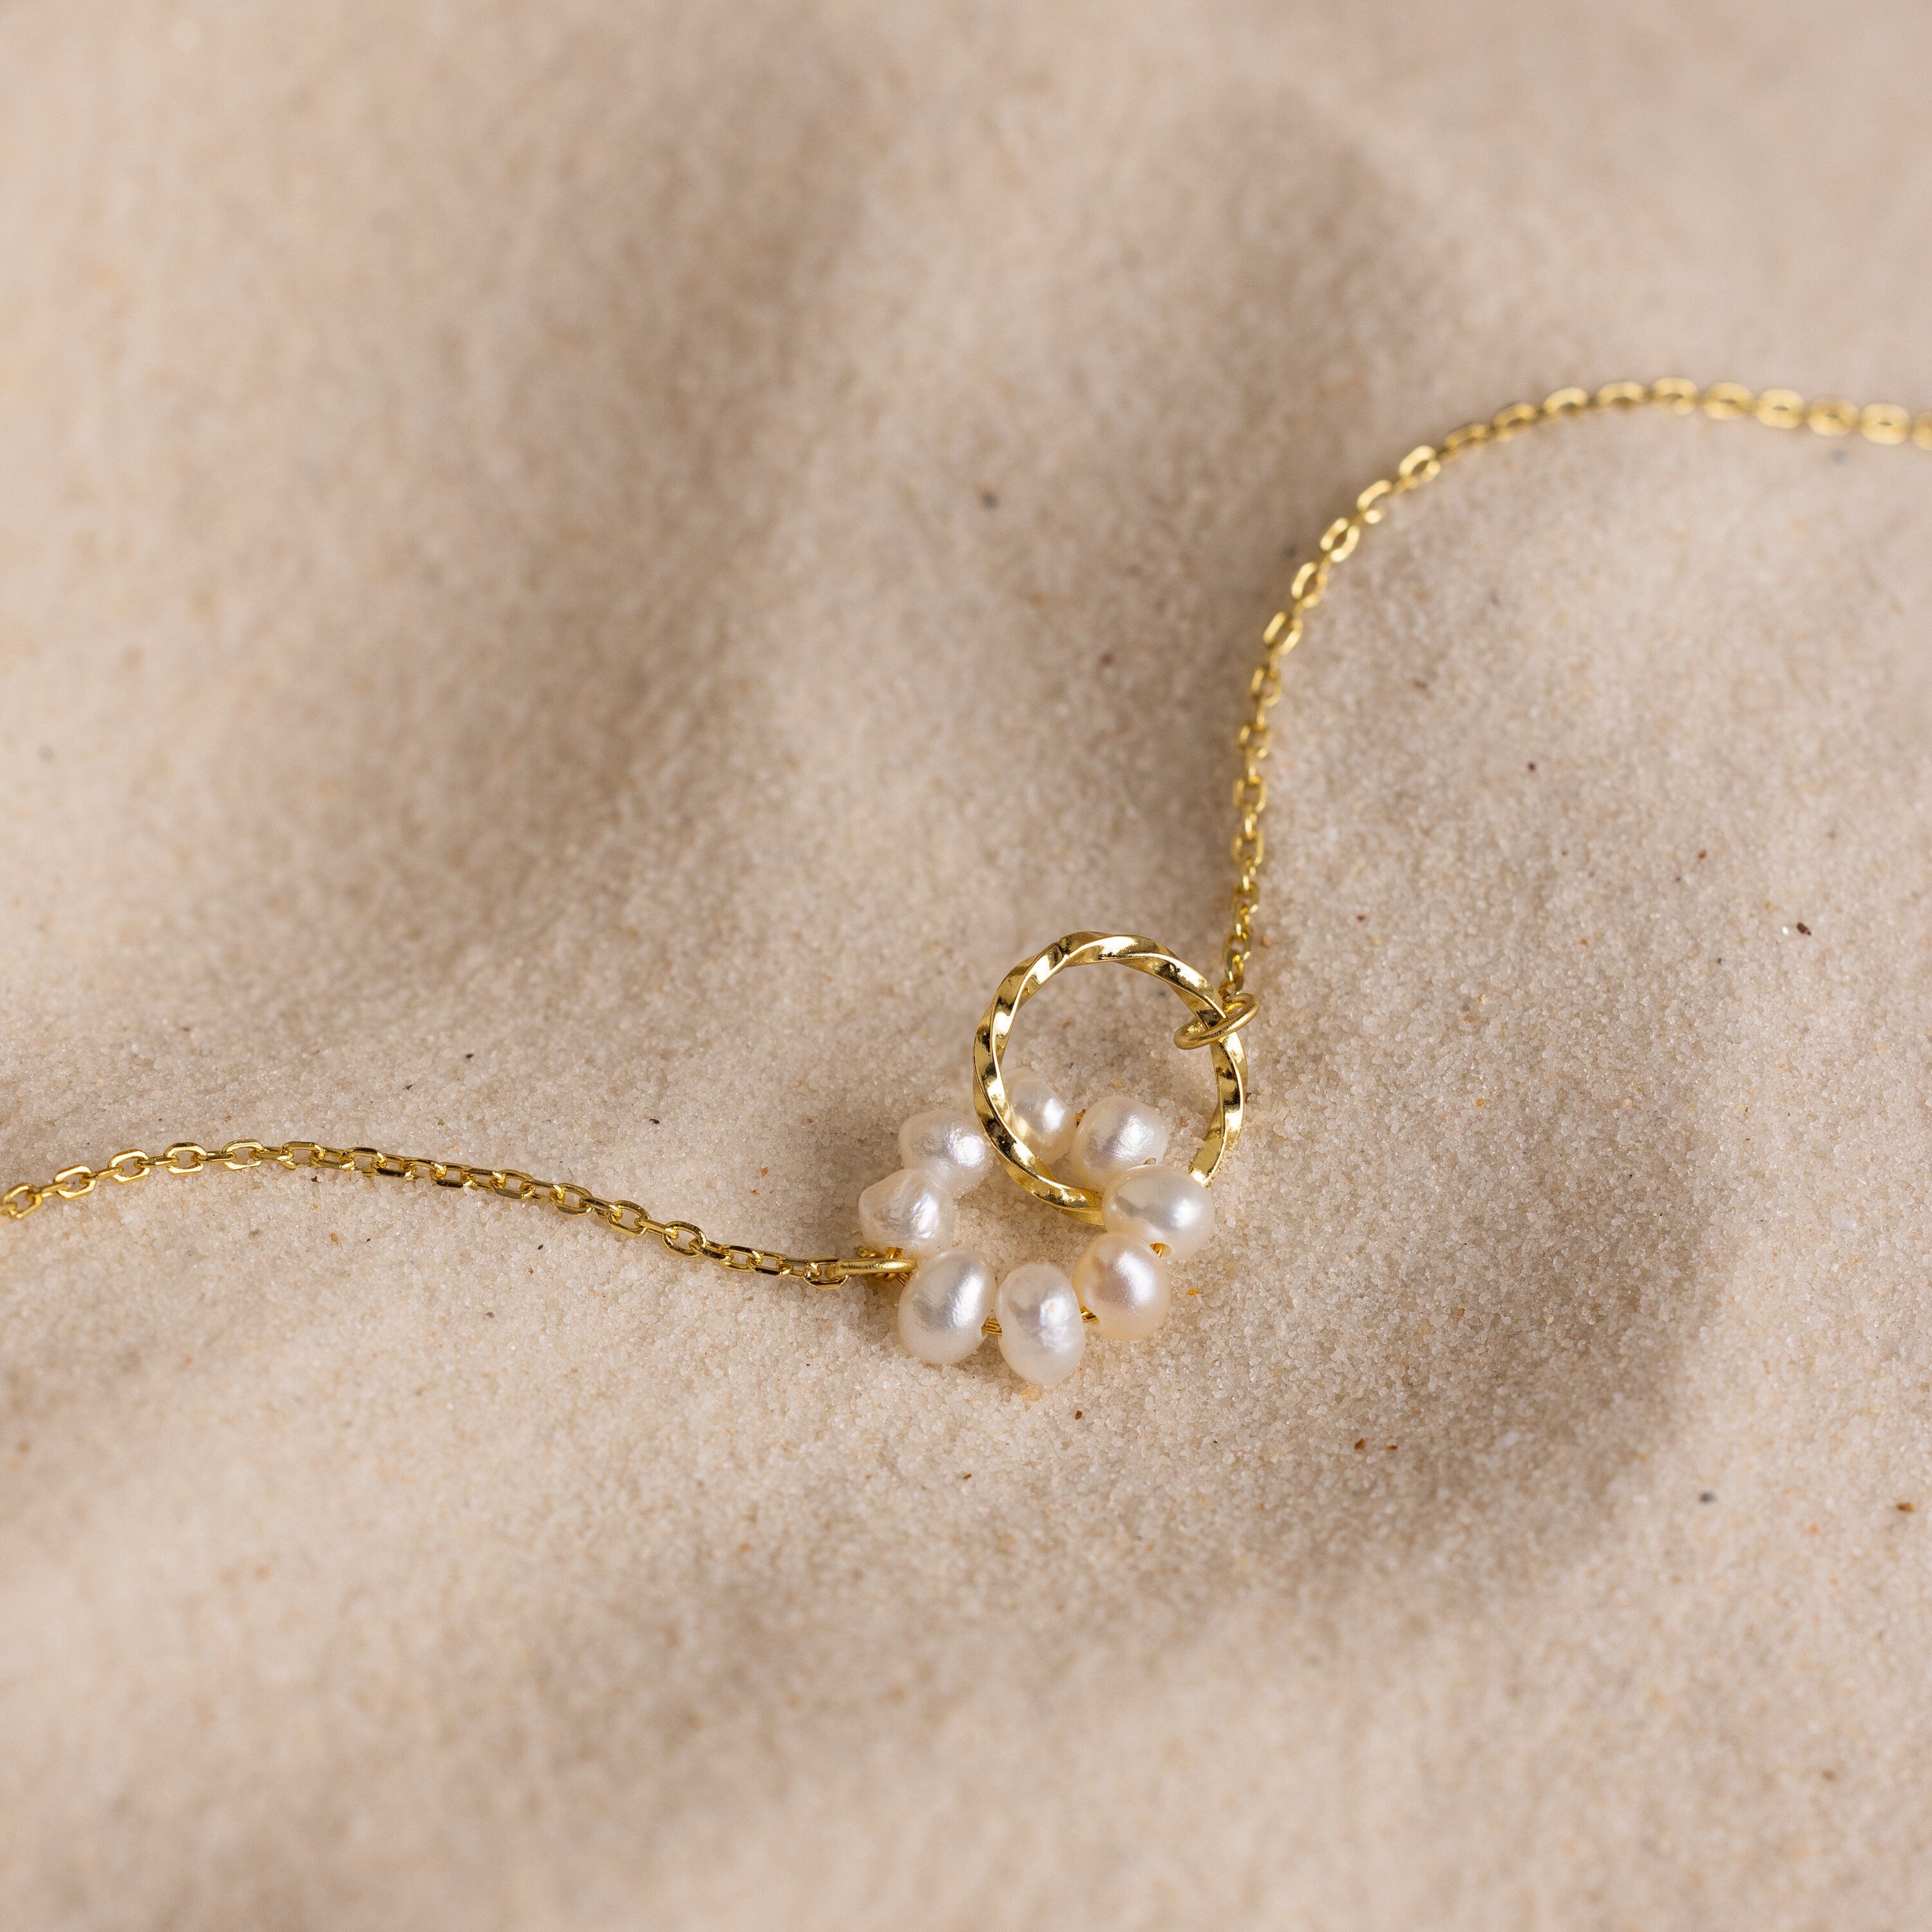 Interlocking Pearl Necklace